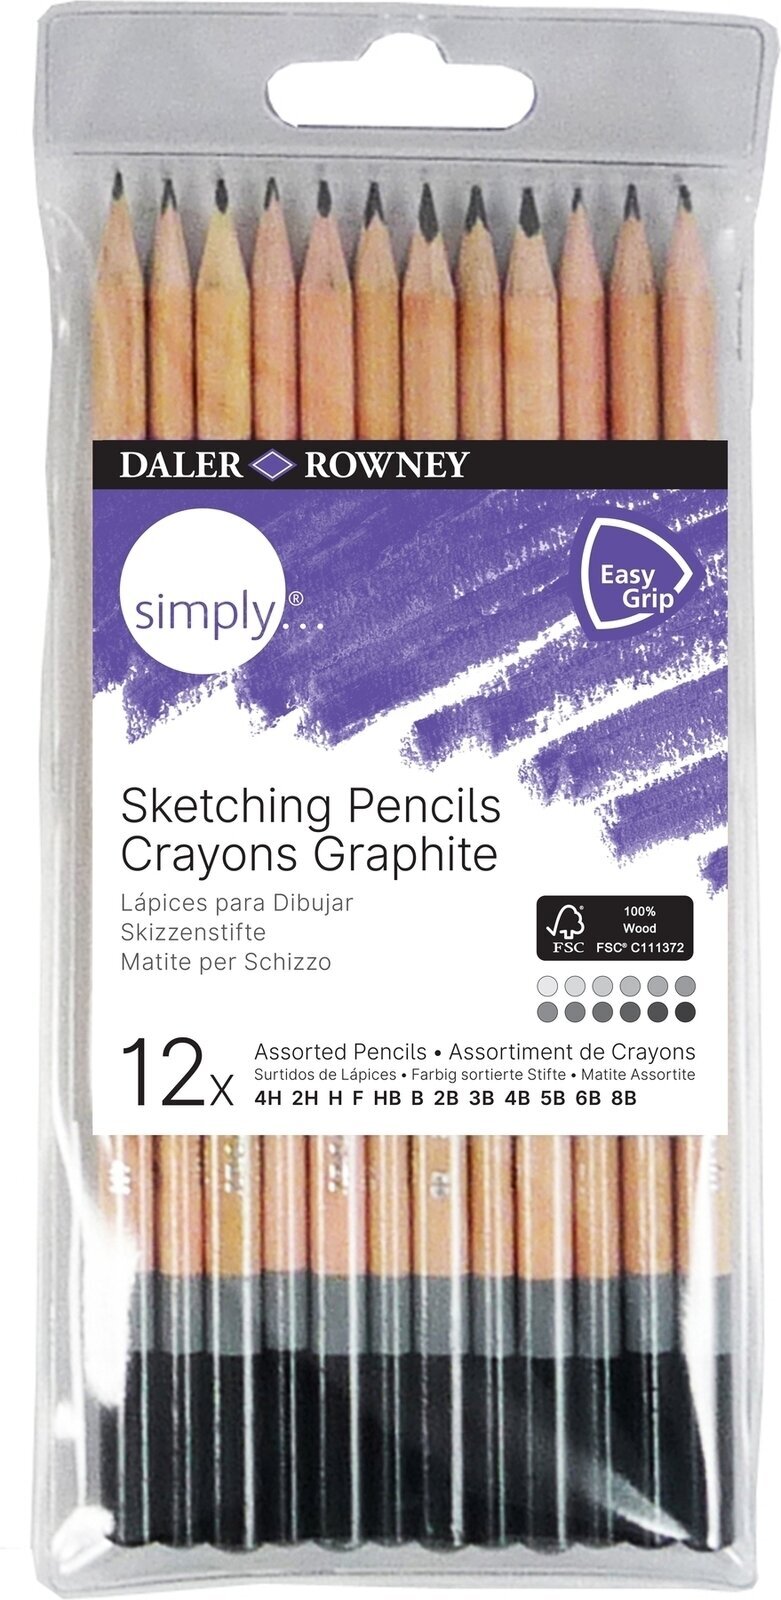 Graphite Pencil Daler Rowney Simply Sketching Pencils Set of Graphite Pencils 12 pcs